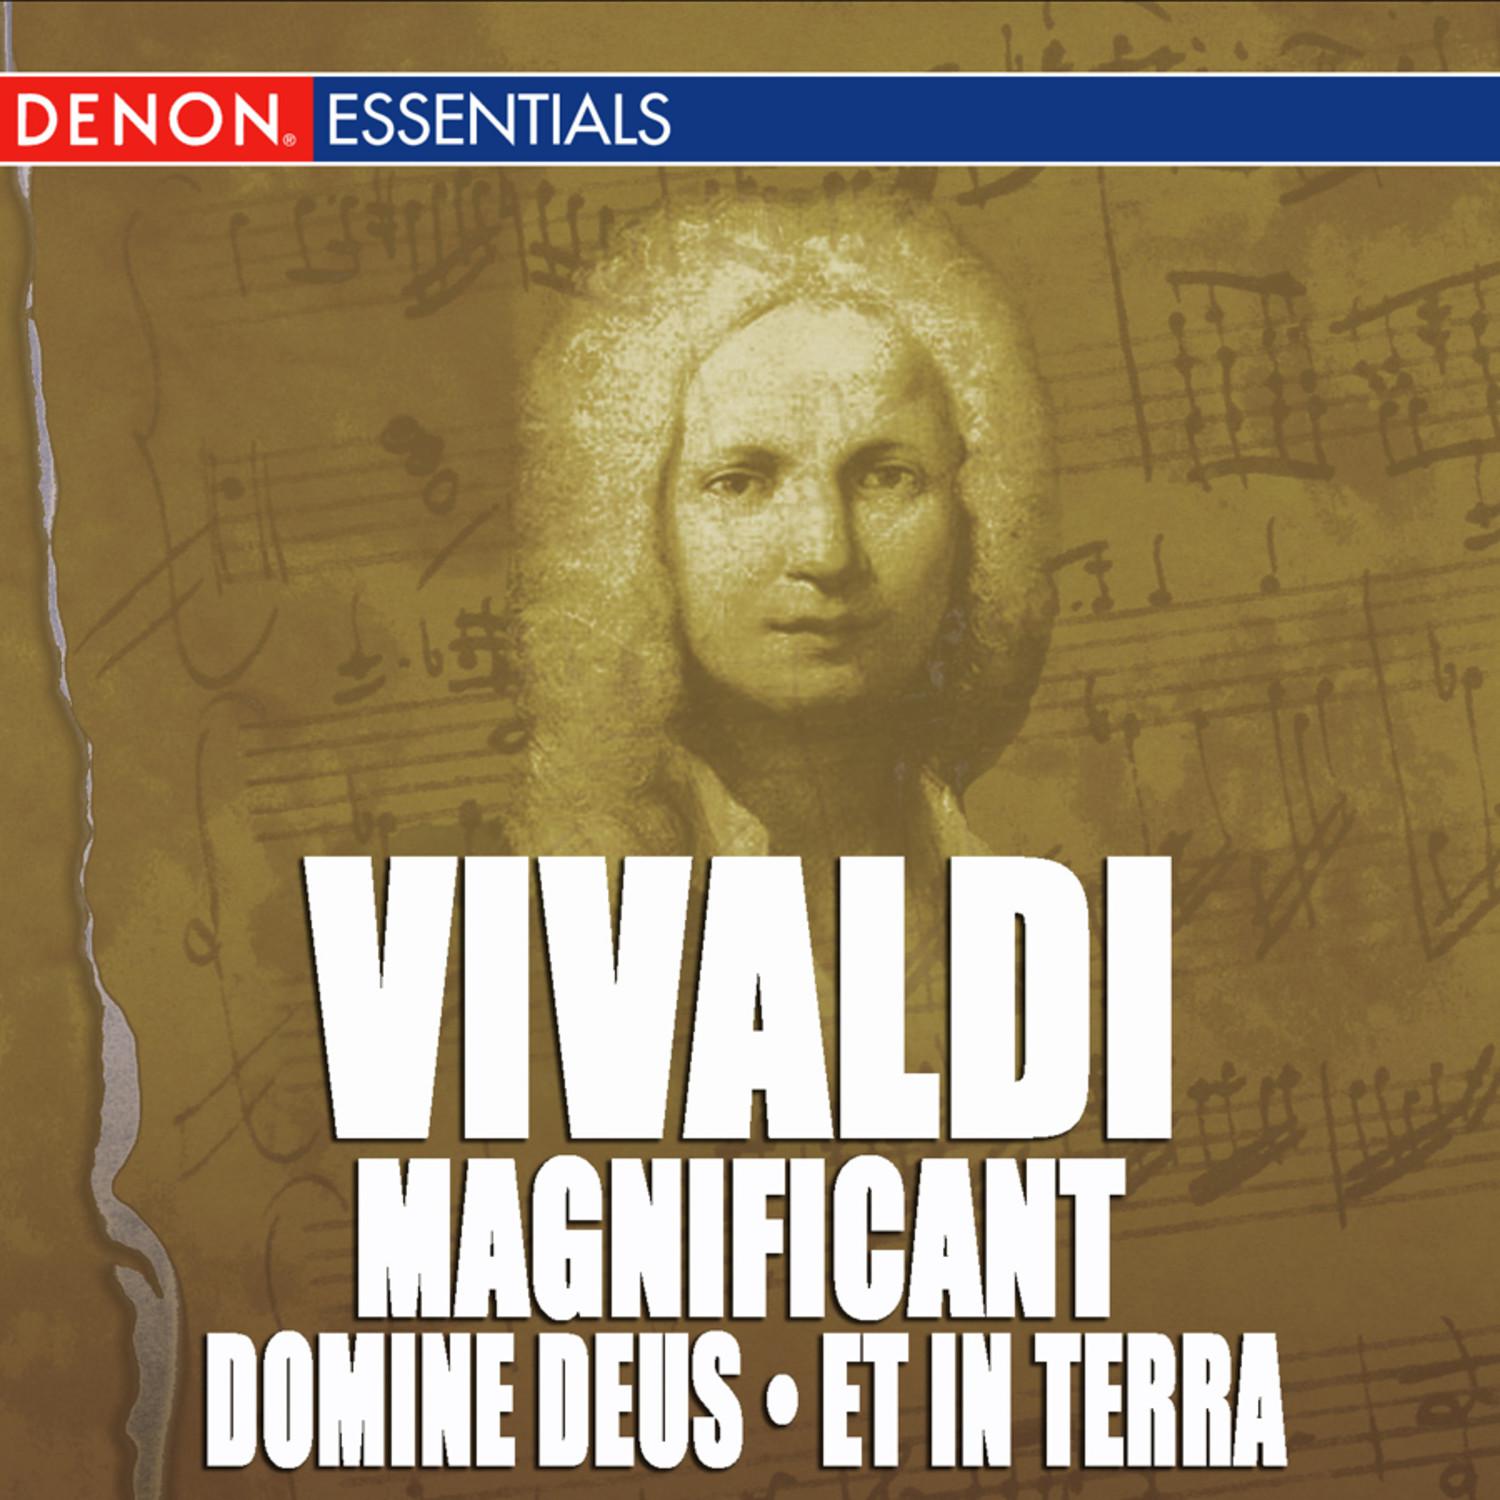 Magnificat In D Major, BWV 243